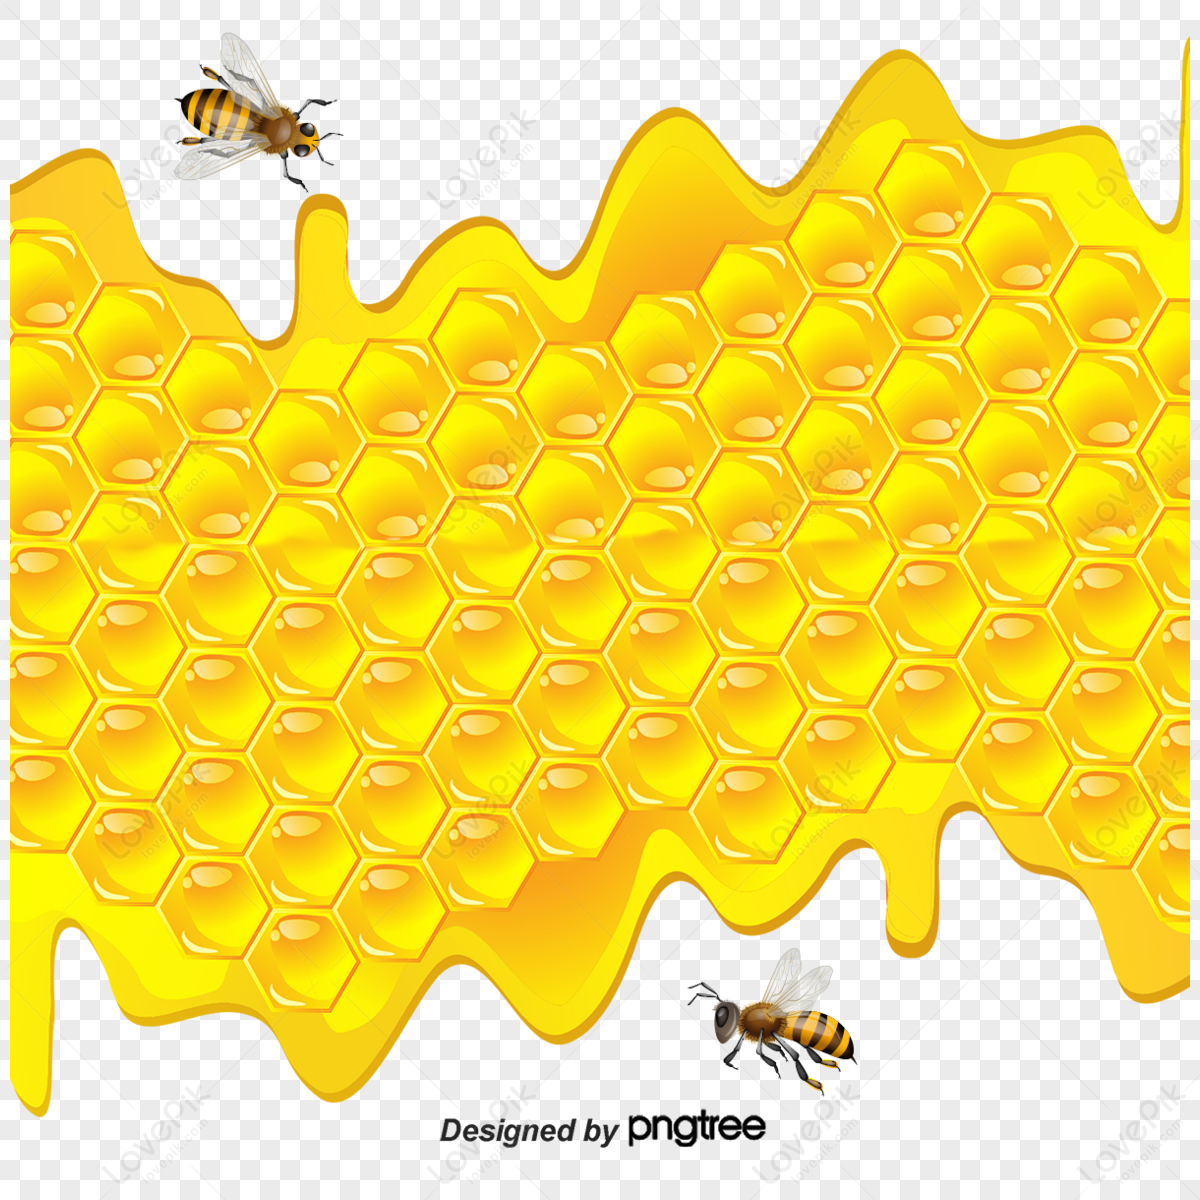 Seven Cells Honeycomb Full Honey Vector Stock Vector (Royalty Free)  1380386180 | Shutterstock